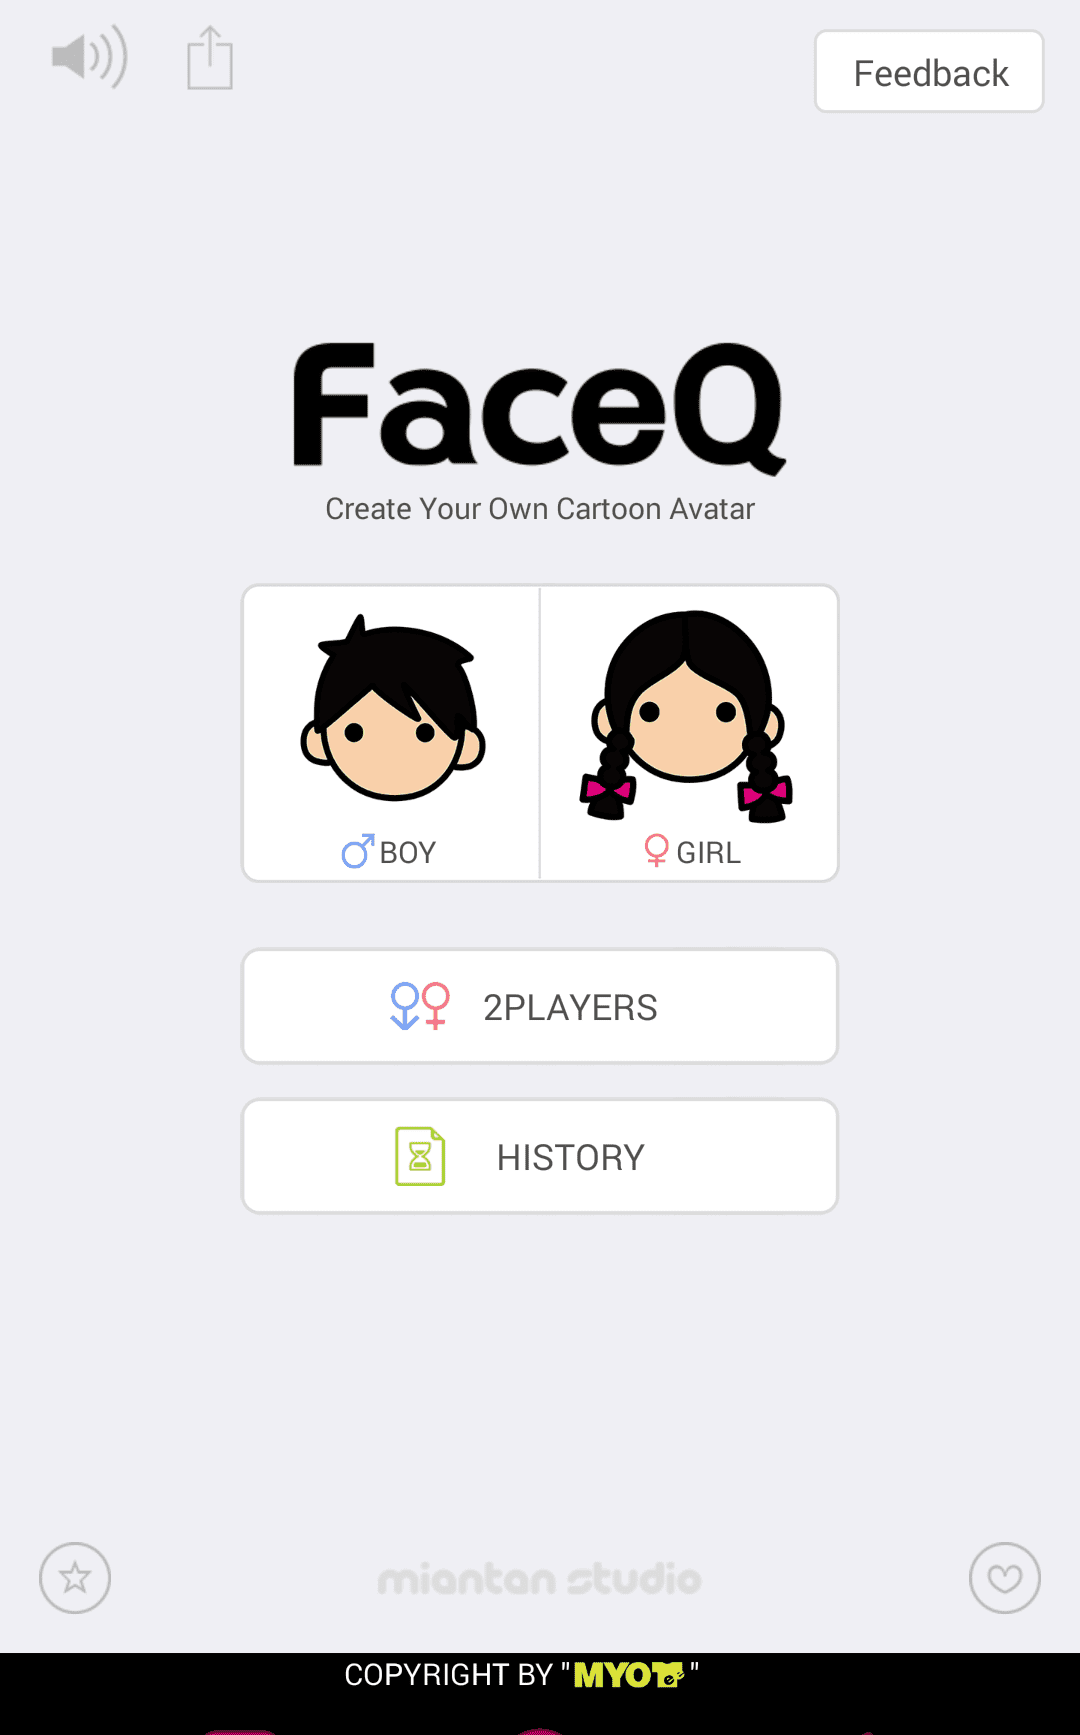 faceq_interface